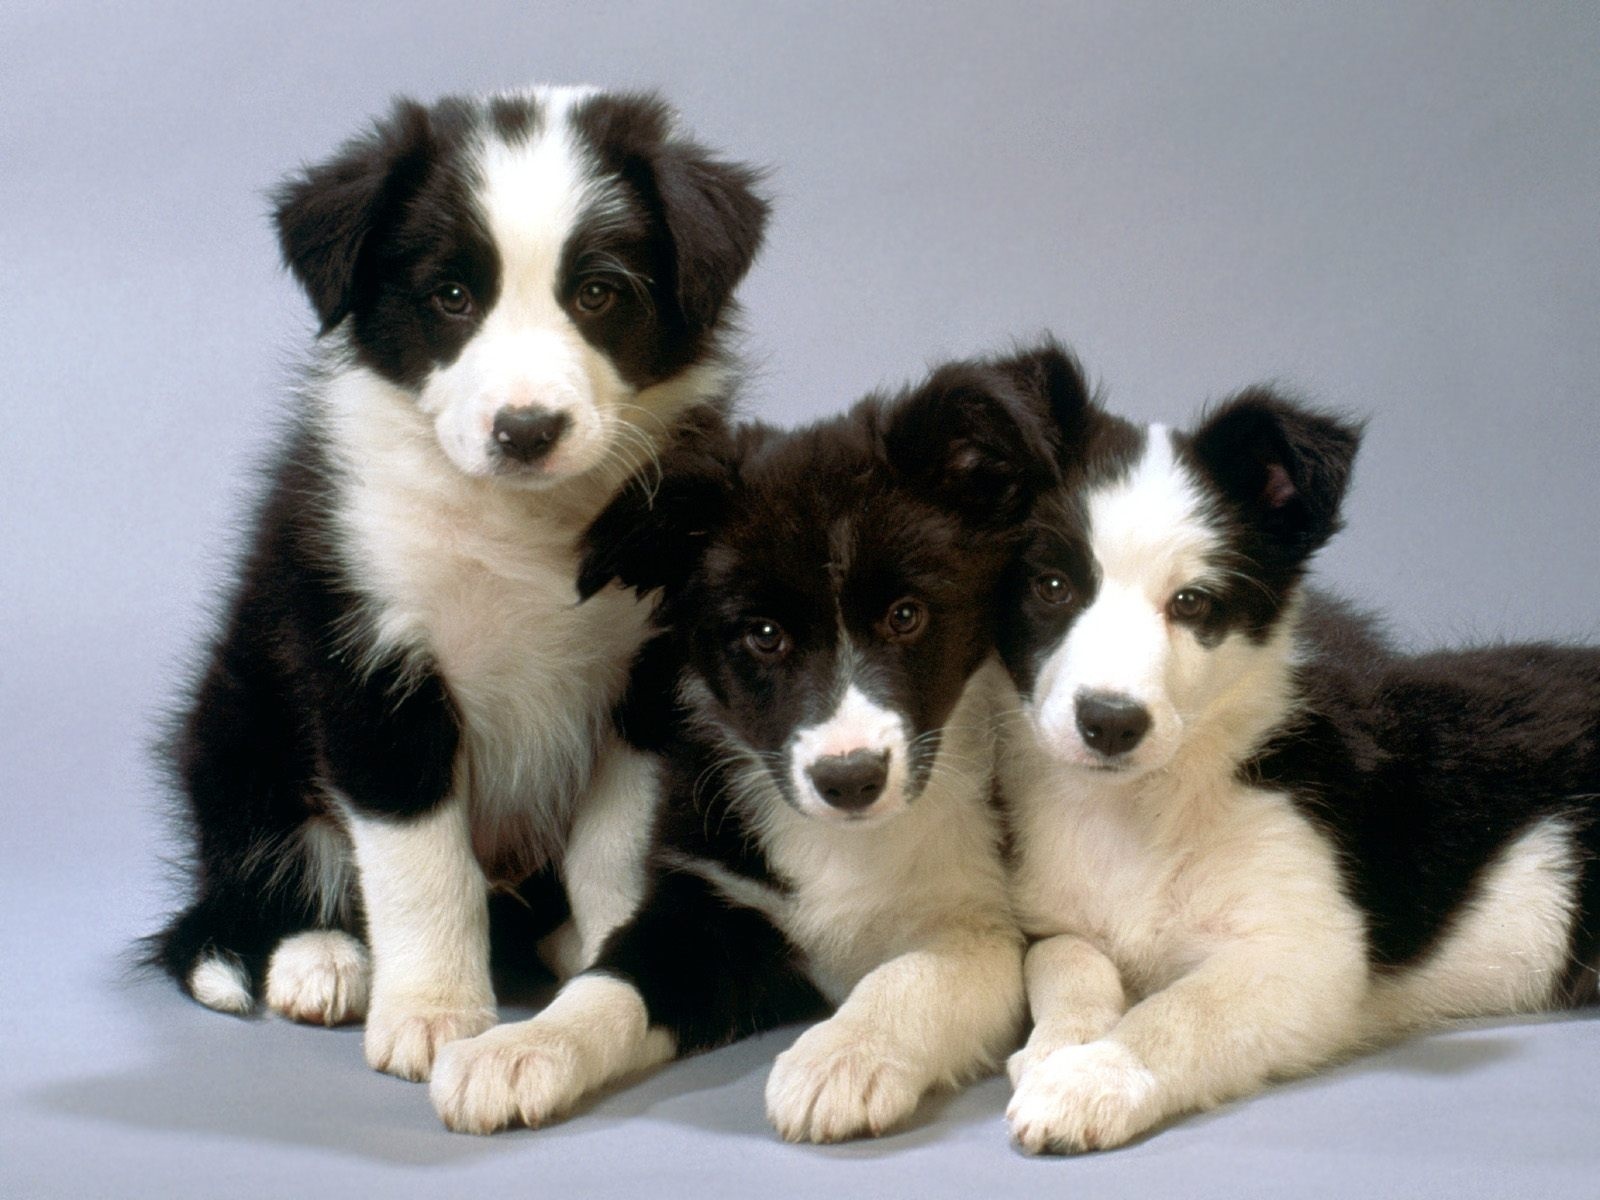 Dogs-dogs-16697072-1600-1200.jpg